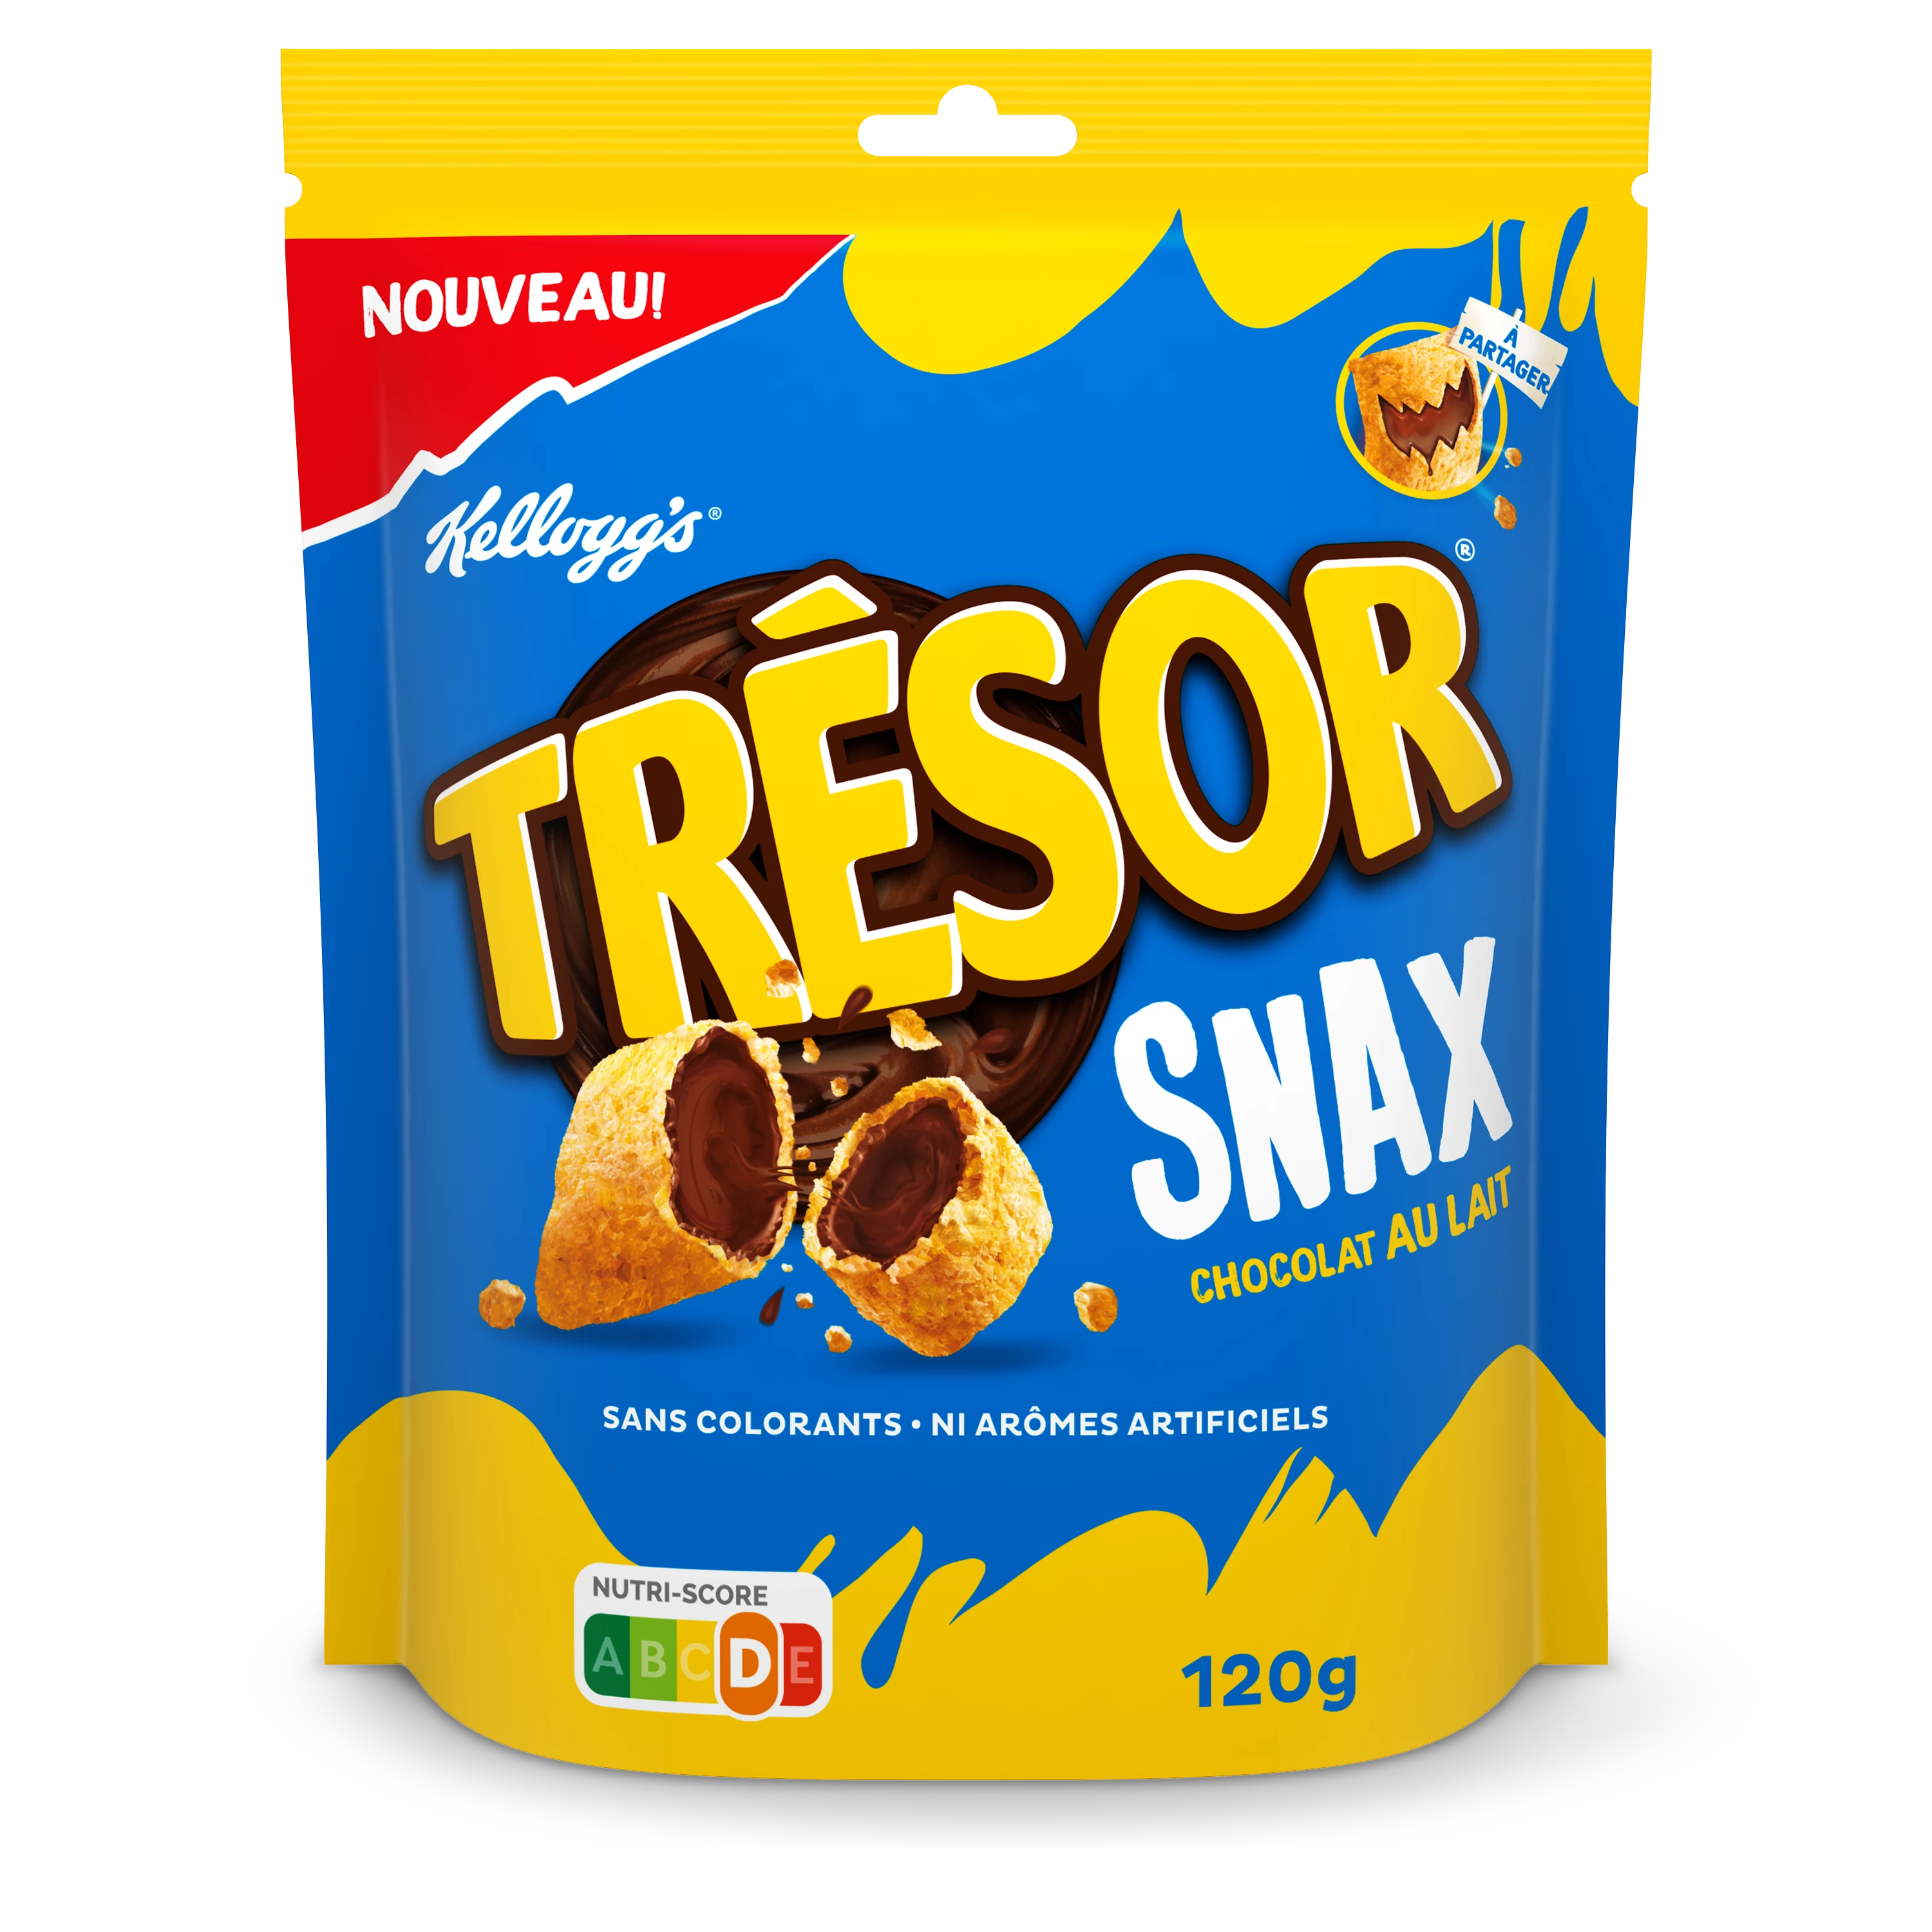 Tresor Snax Chocolate Milk 120g